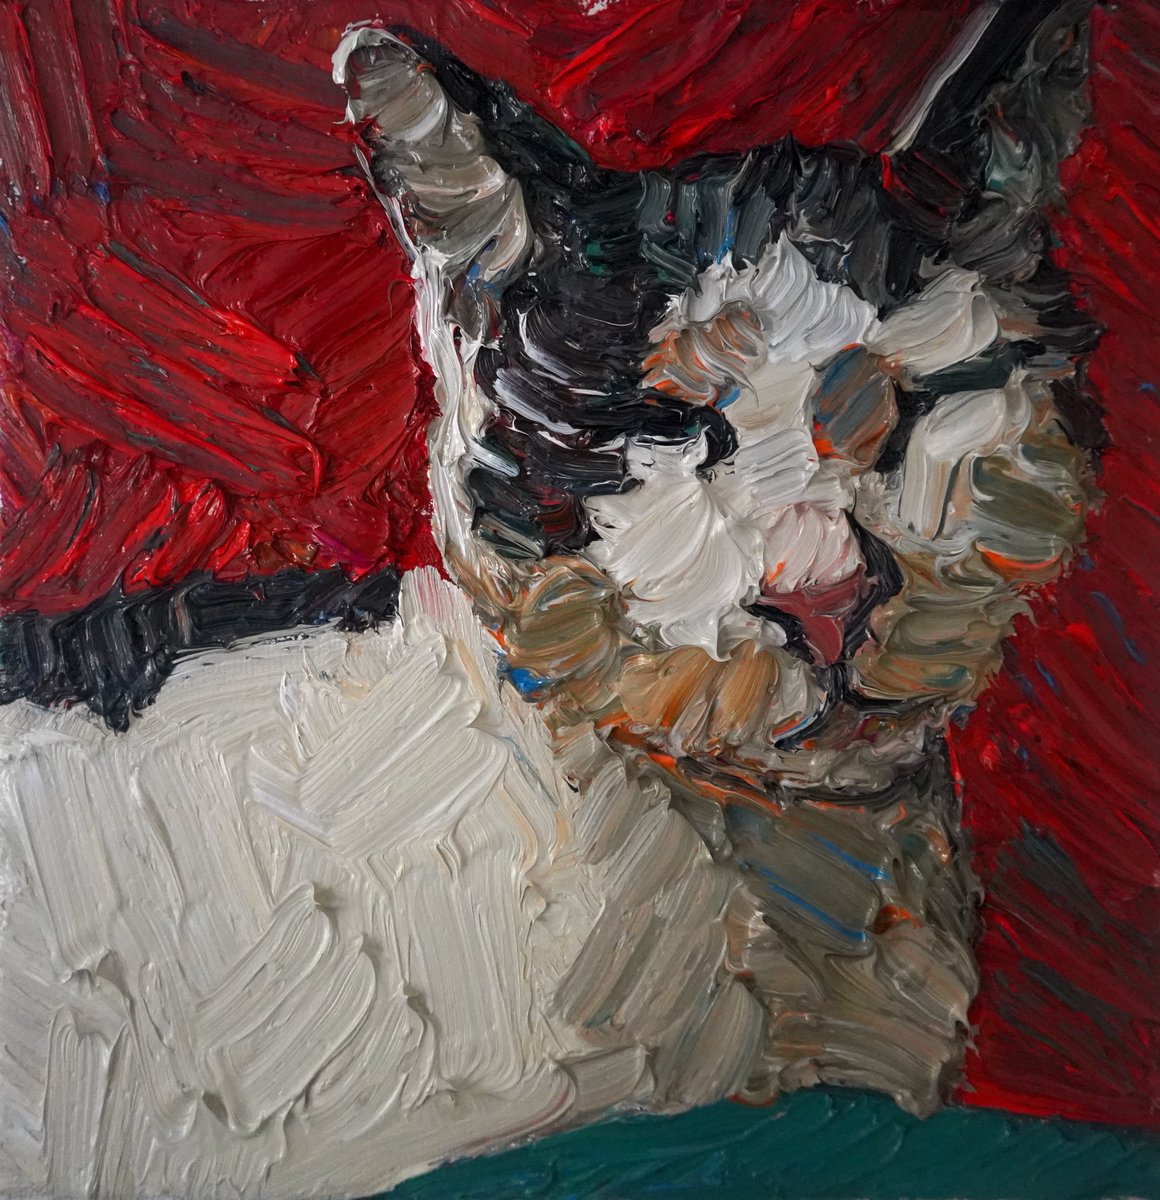 Cat
#oilpainting
.
.
.
#art #impasto #original #artwork #cat #sleepingcat #painting #contemporaryoilpainting #contemporaryart #contemporarypainting #impressionism #expressionism #fineart #figurativeart #oil
@saatchiart